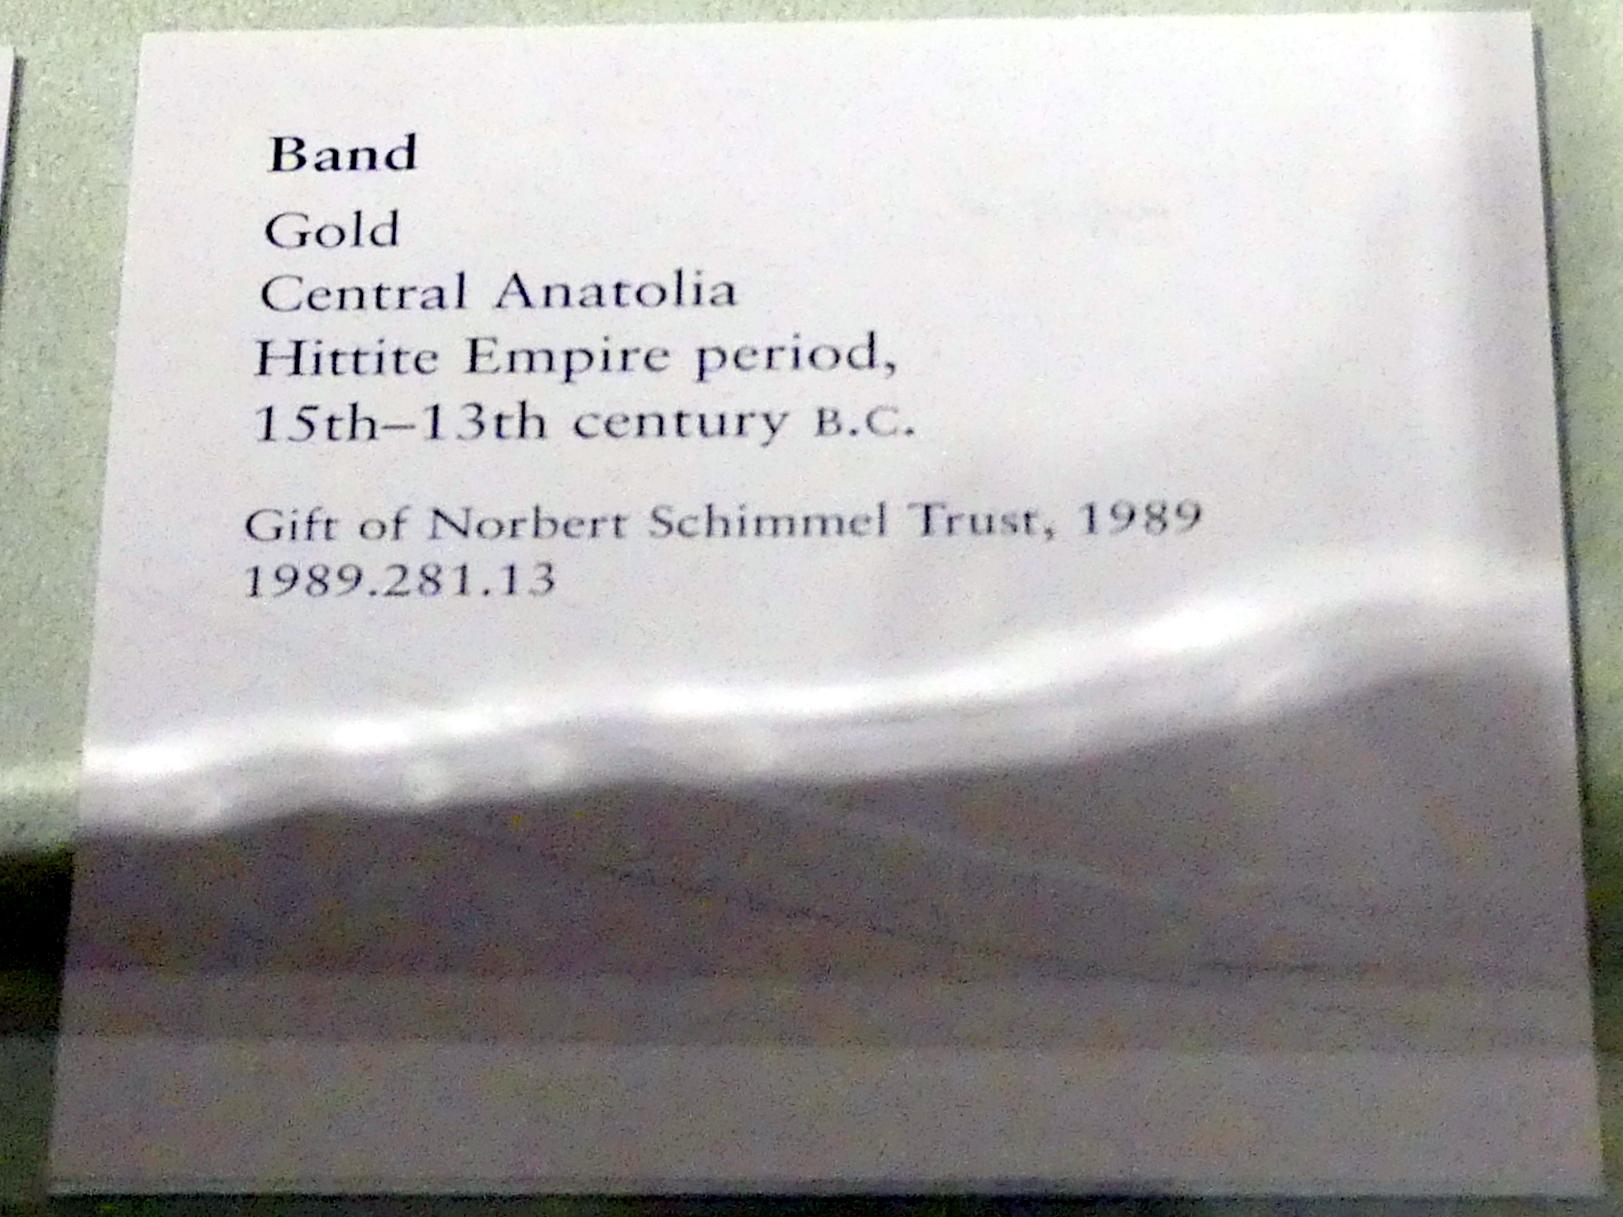 Band, 1500 - 1200 v. Chr., Bild 2/2